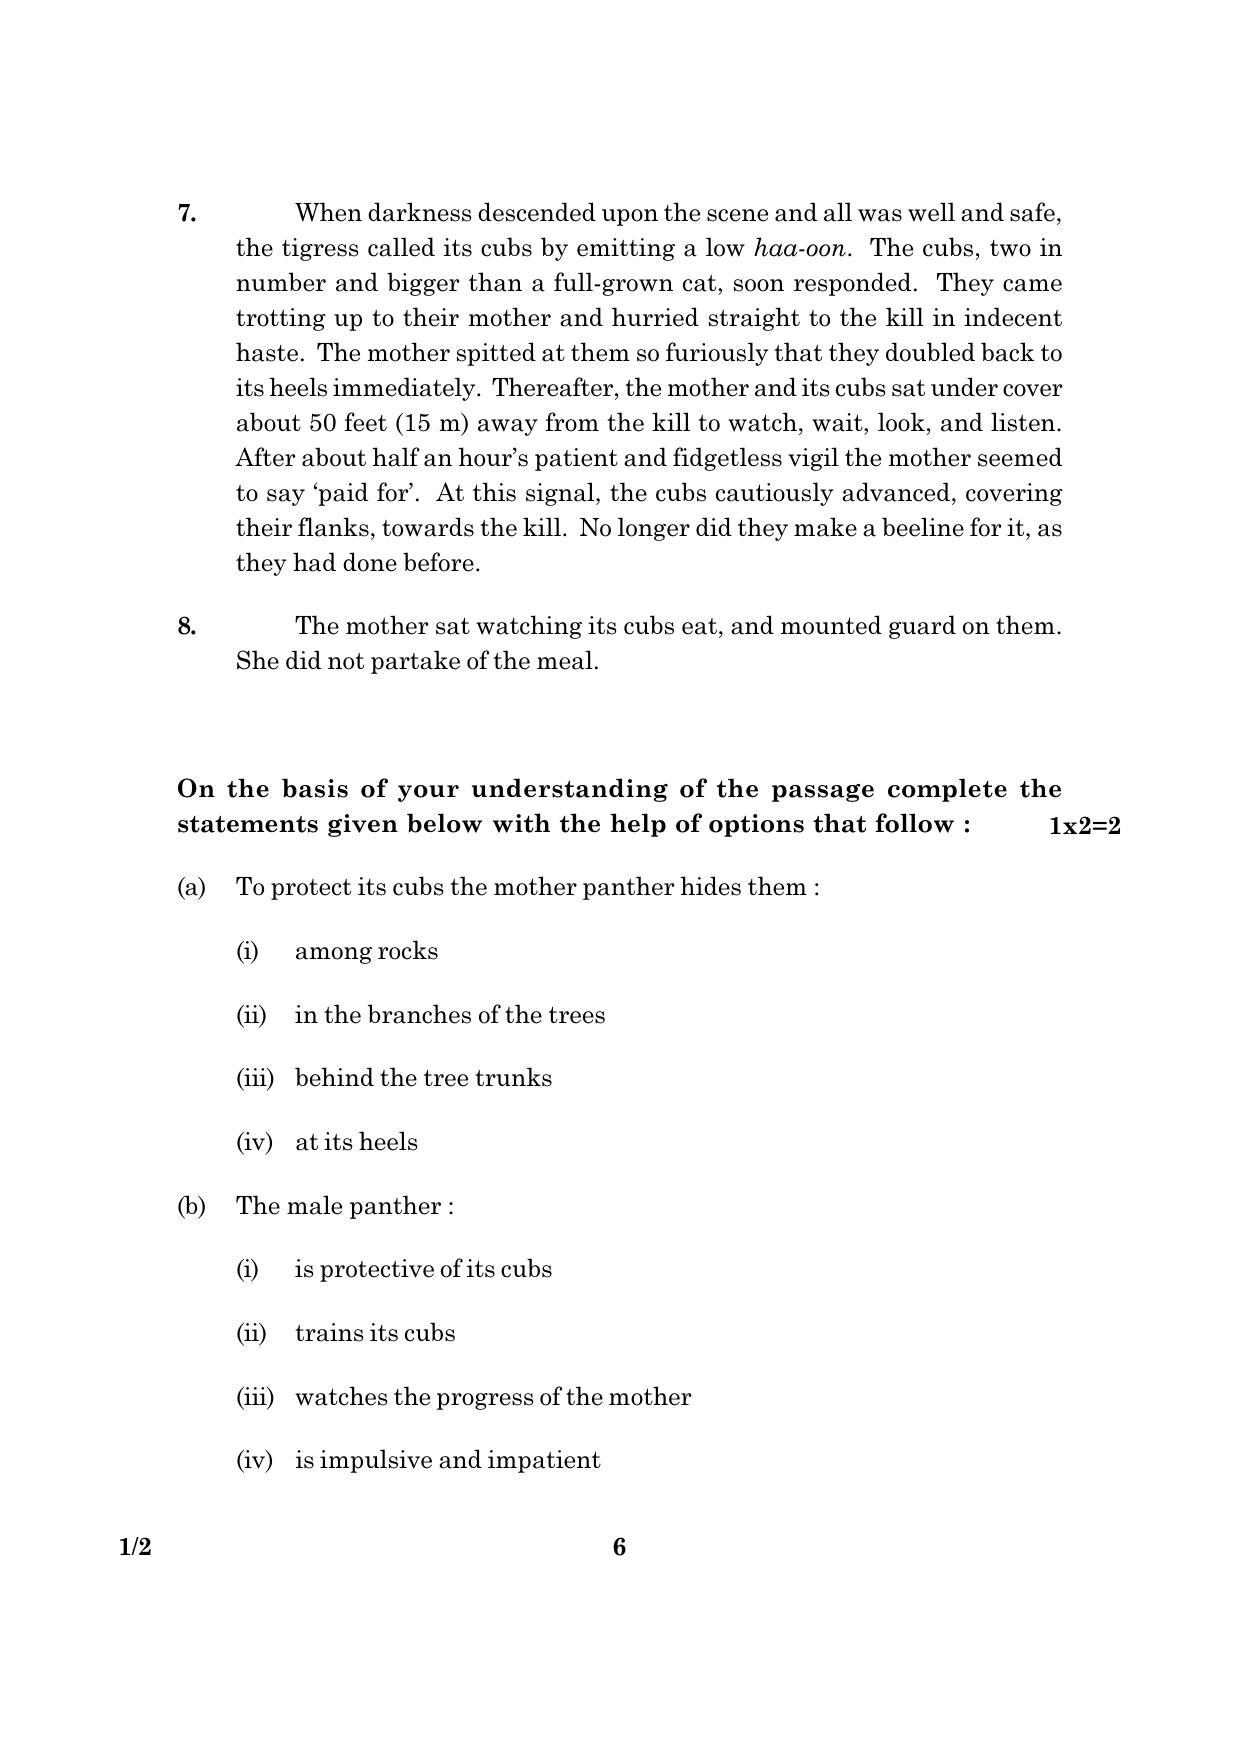 CBSE Class 12 001 Set 2 English Core 2016 Question Paper - Page 6